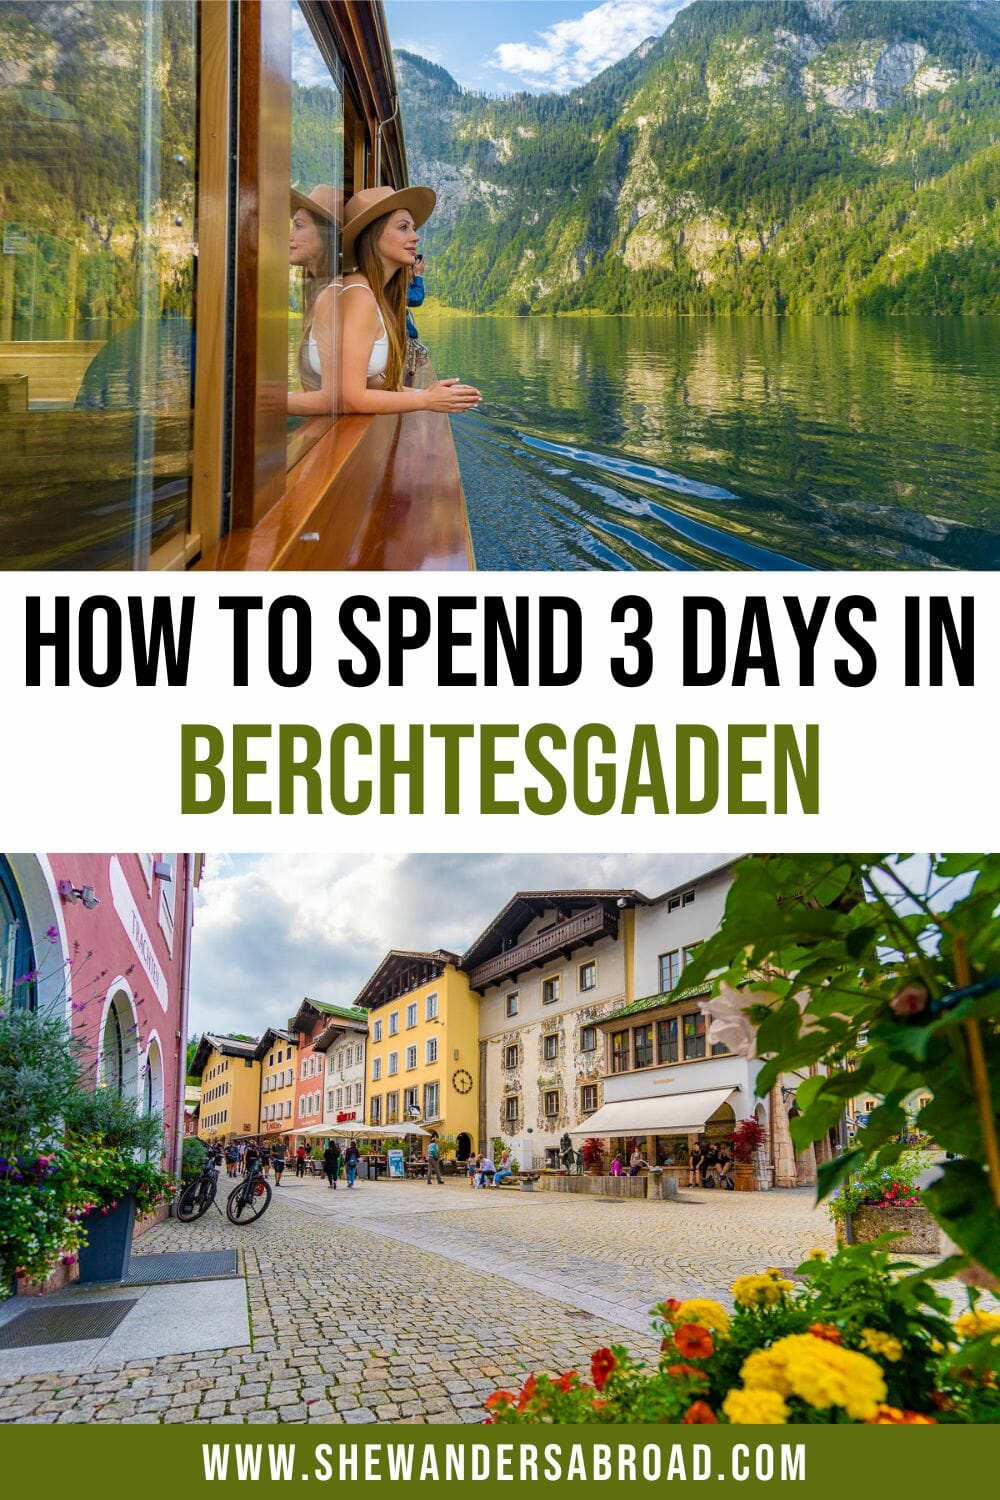 3 Day Berchtesgaden Itinerary: A Long Weekend in Berchtesgaden, Germany